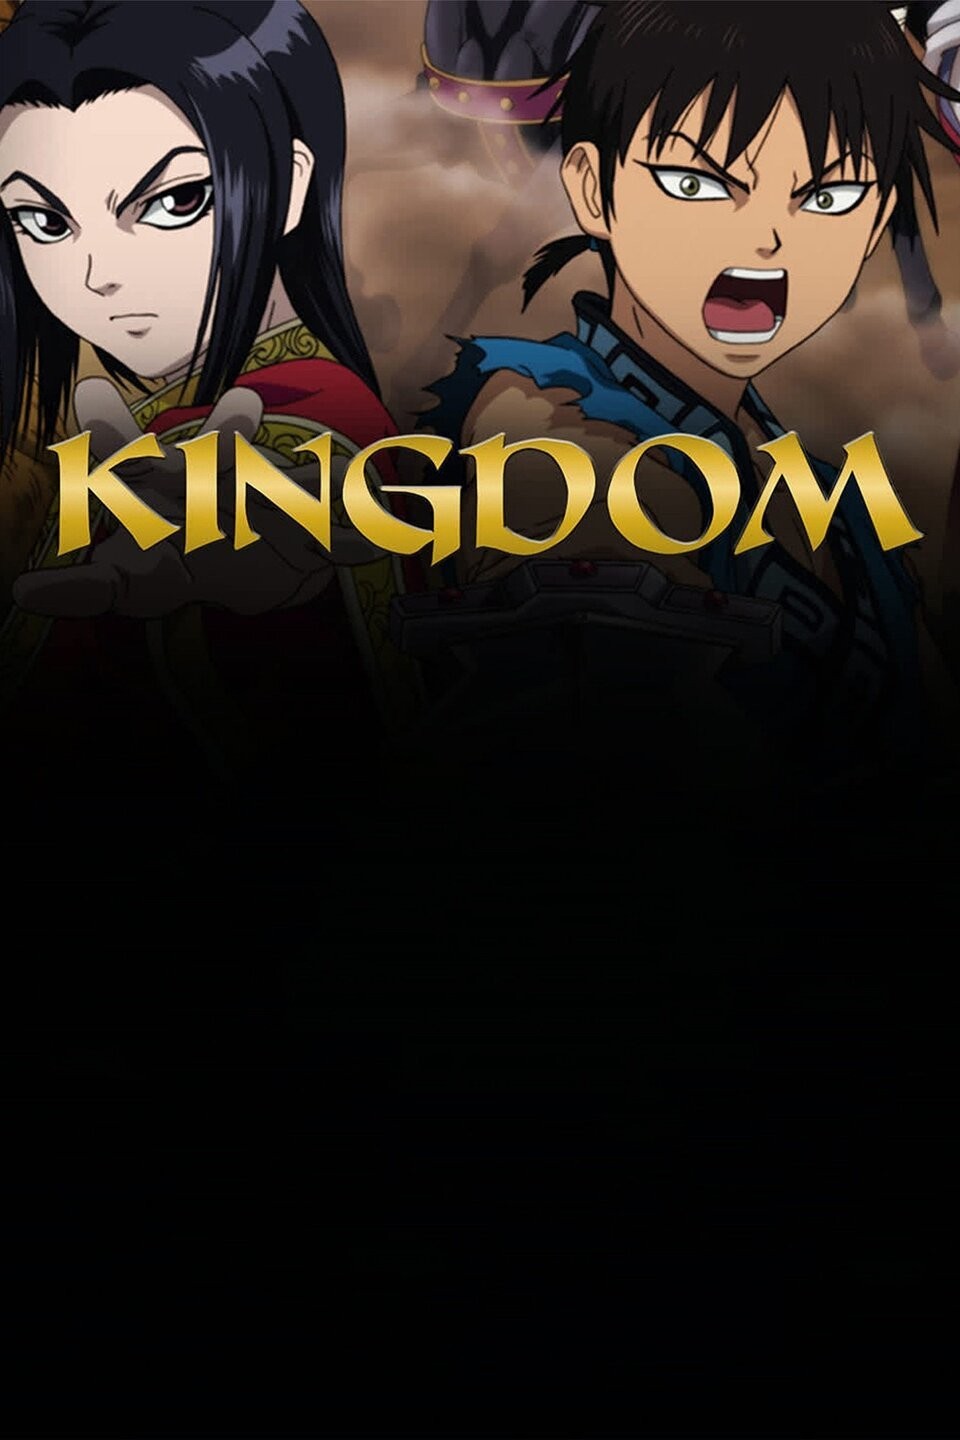 Kingdom Anime Season 4 Reveals Key Visual & April 9 Premiere